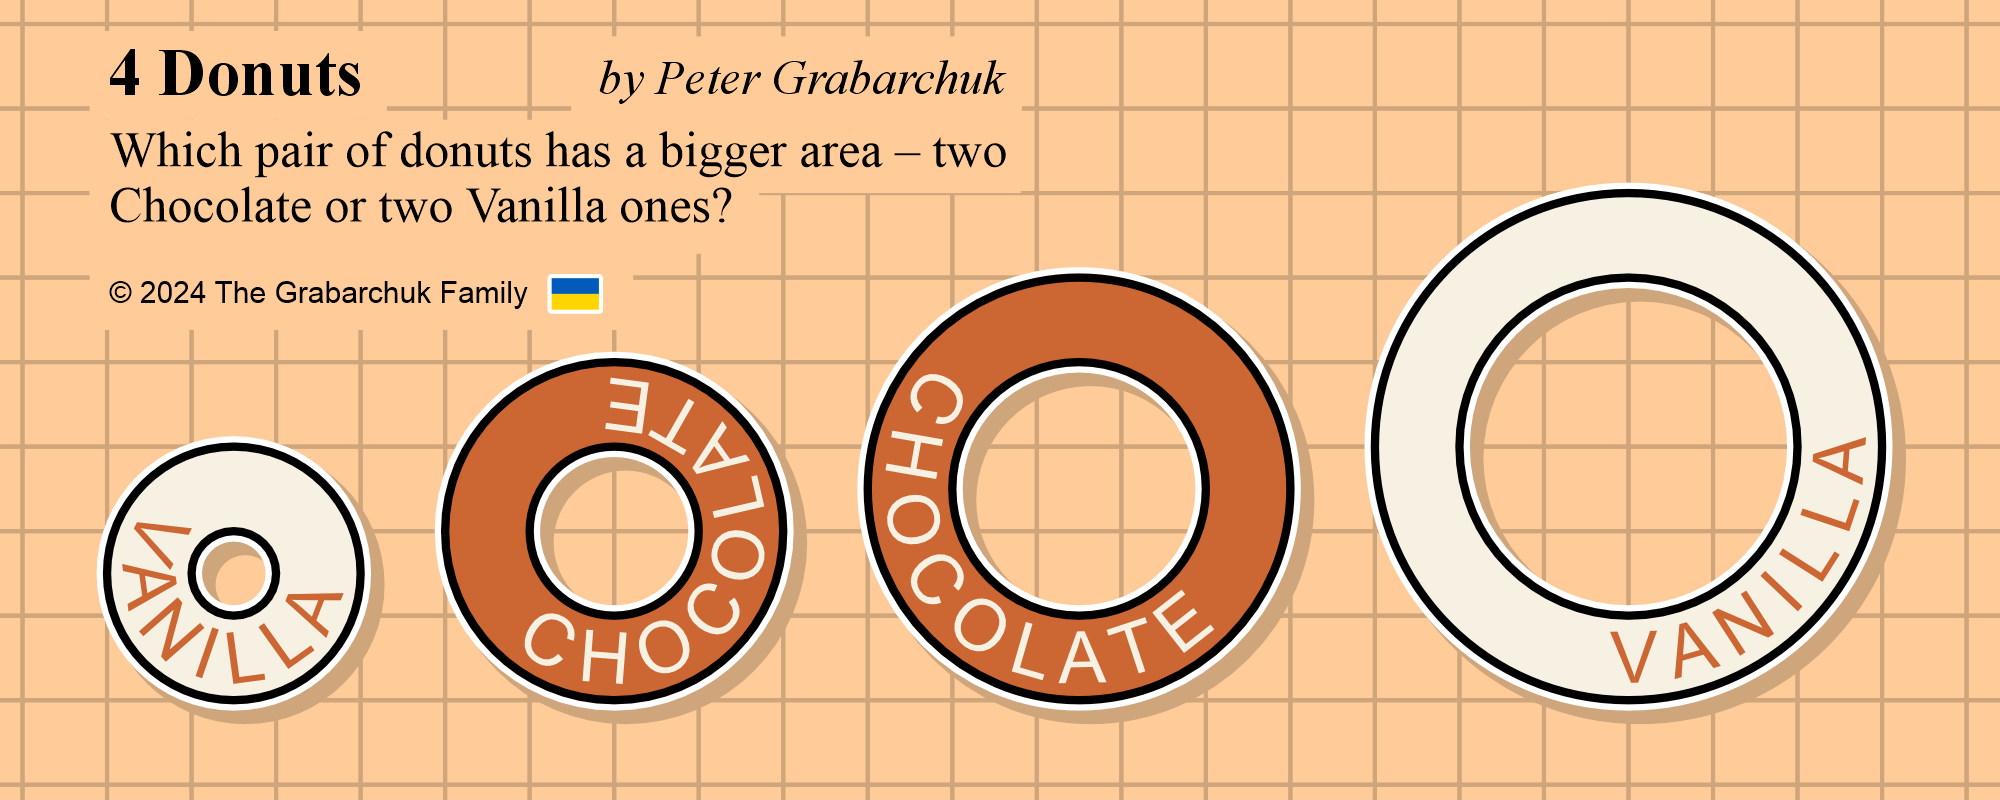 4 Donuts by Peter Grabarchuk